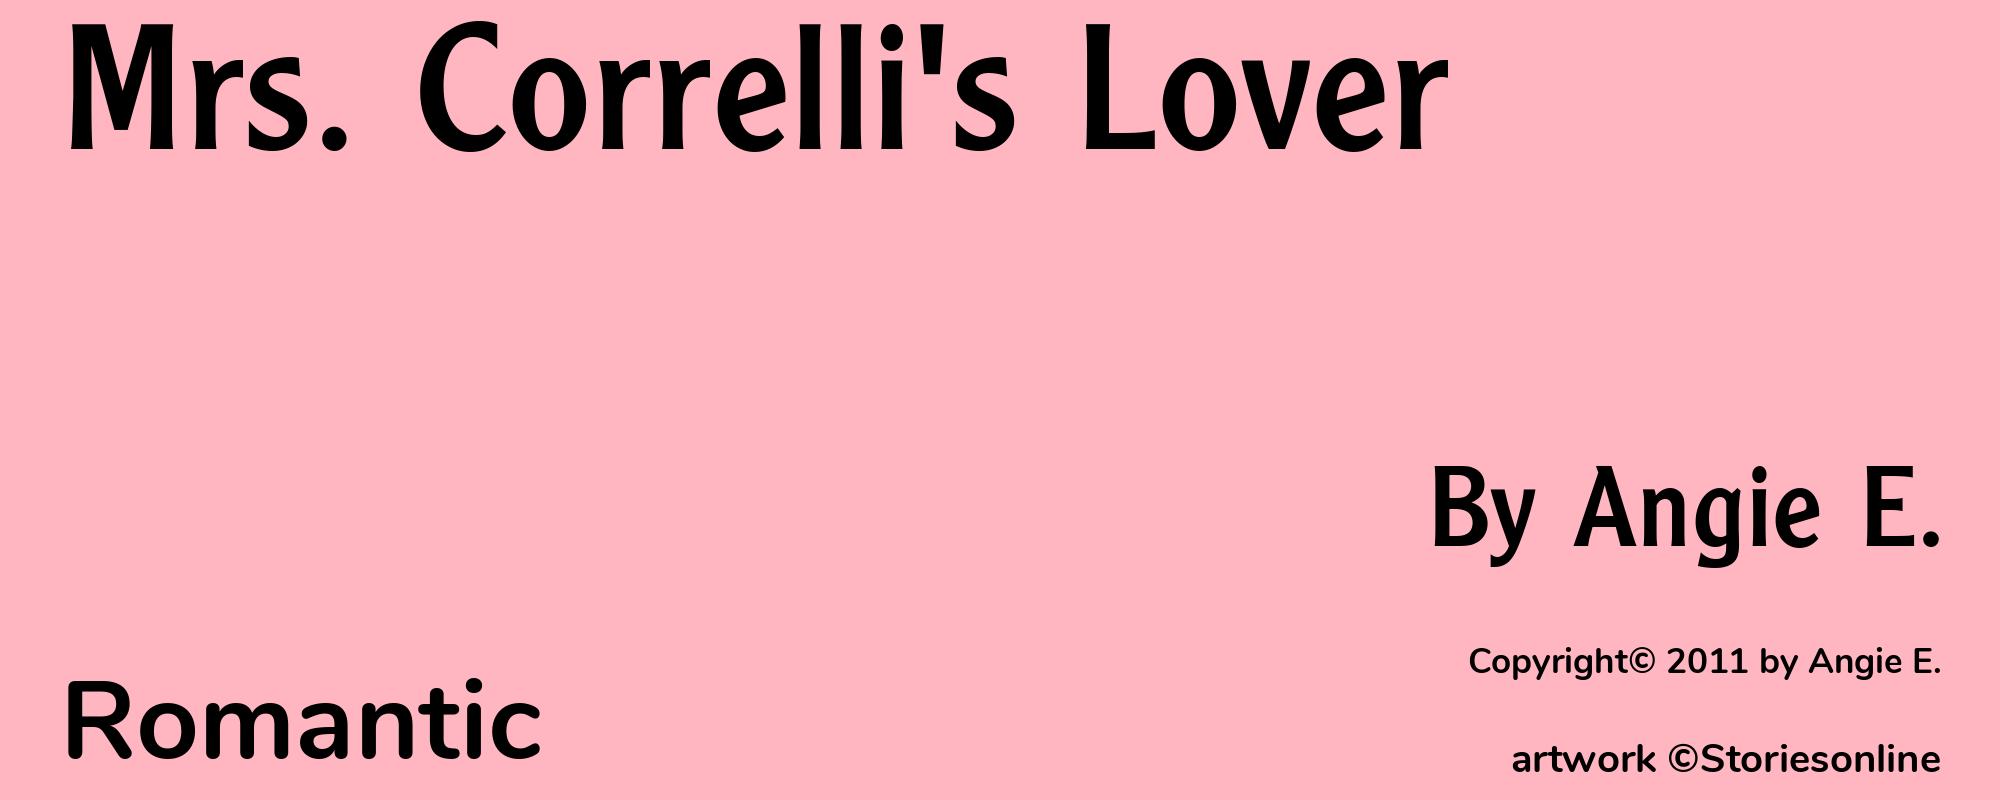 Mrs. Correlli's Lover - Cover